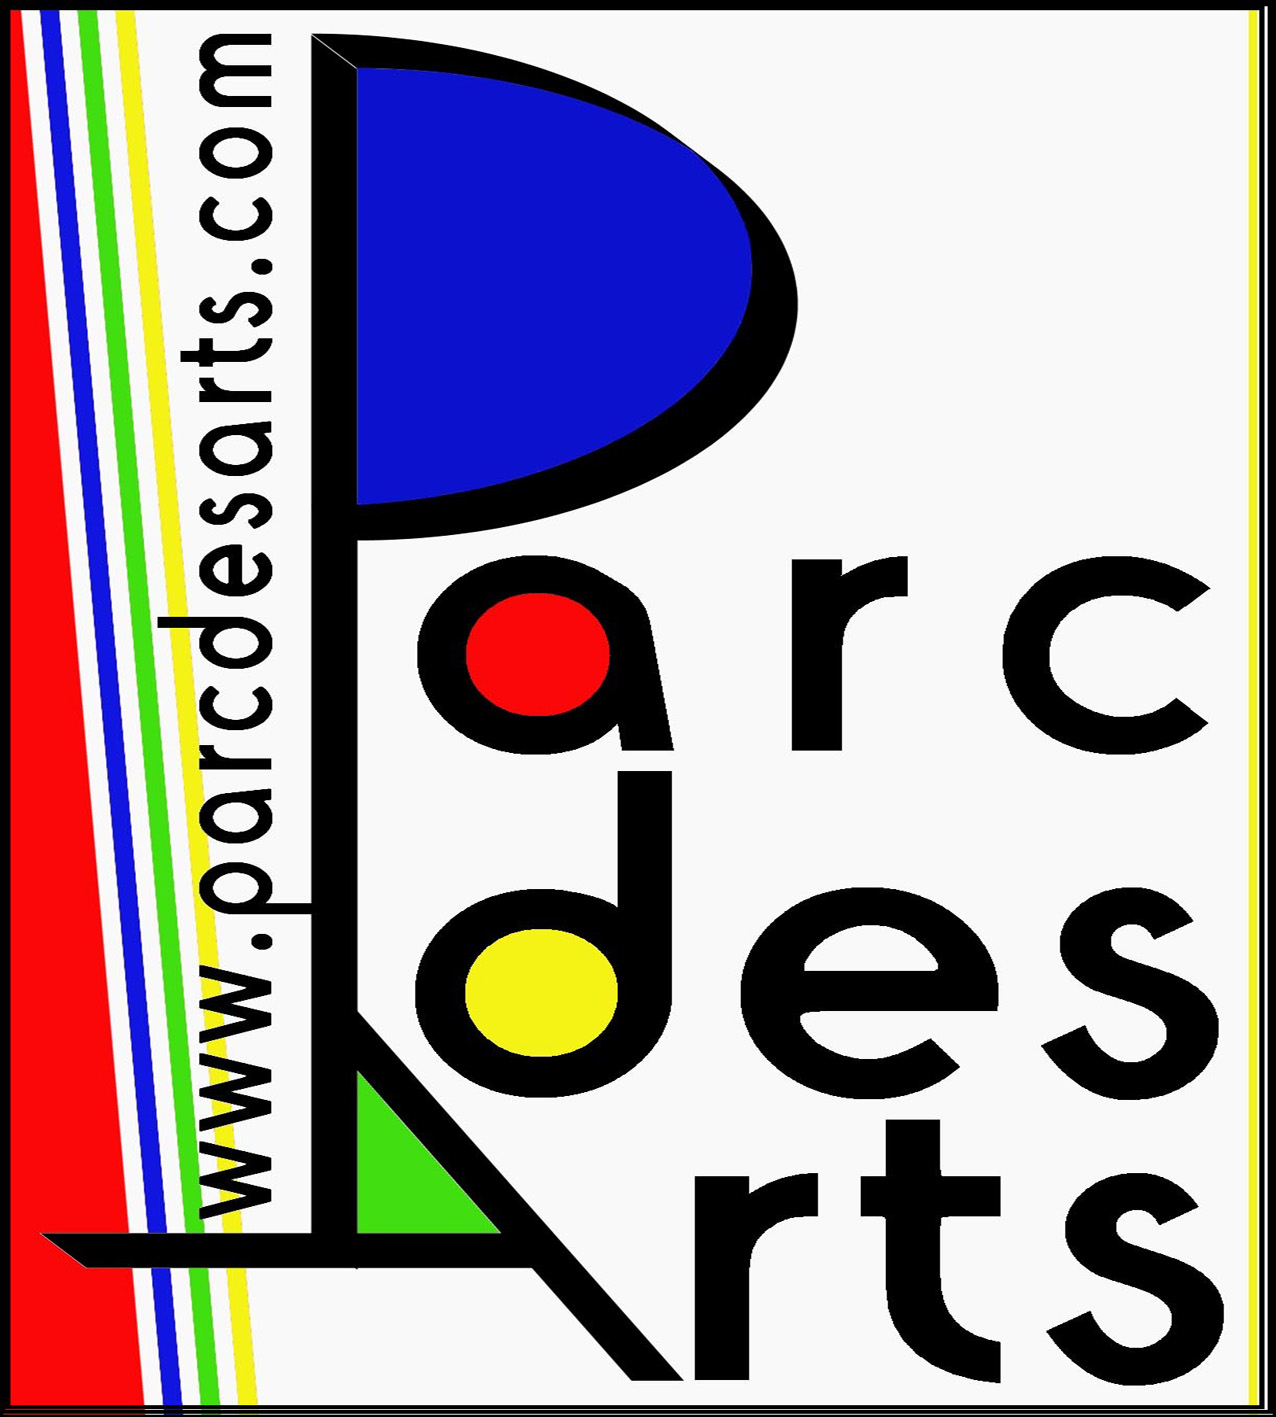 logo definitif parc des arts0.jpg